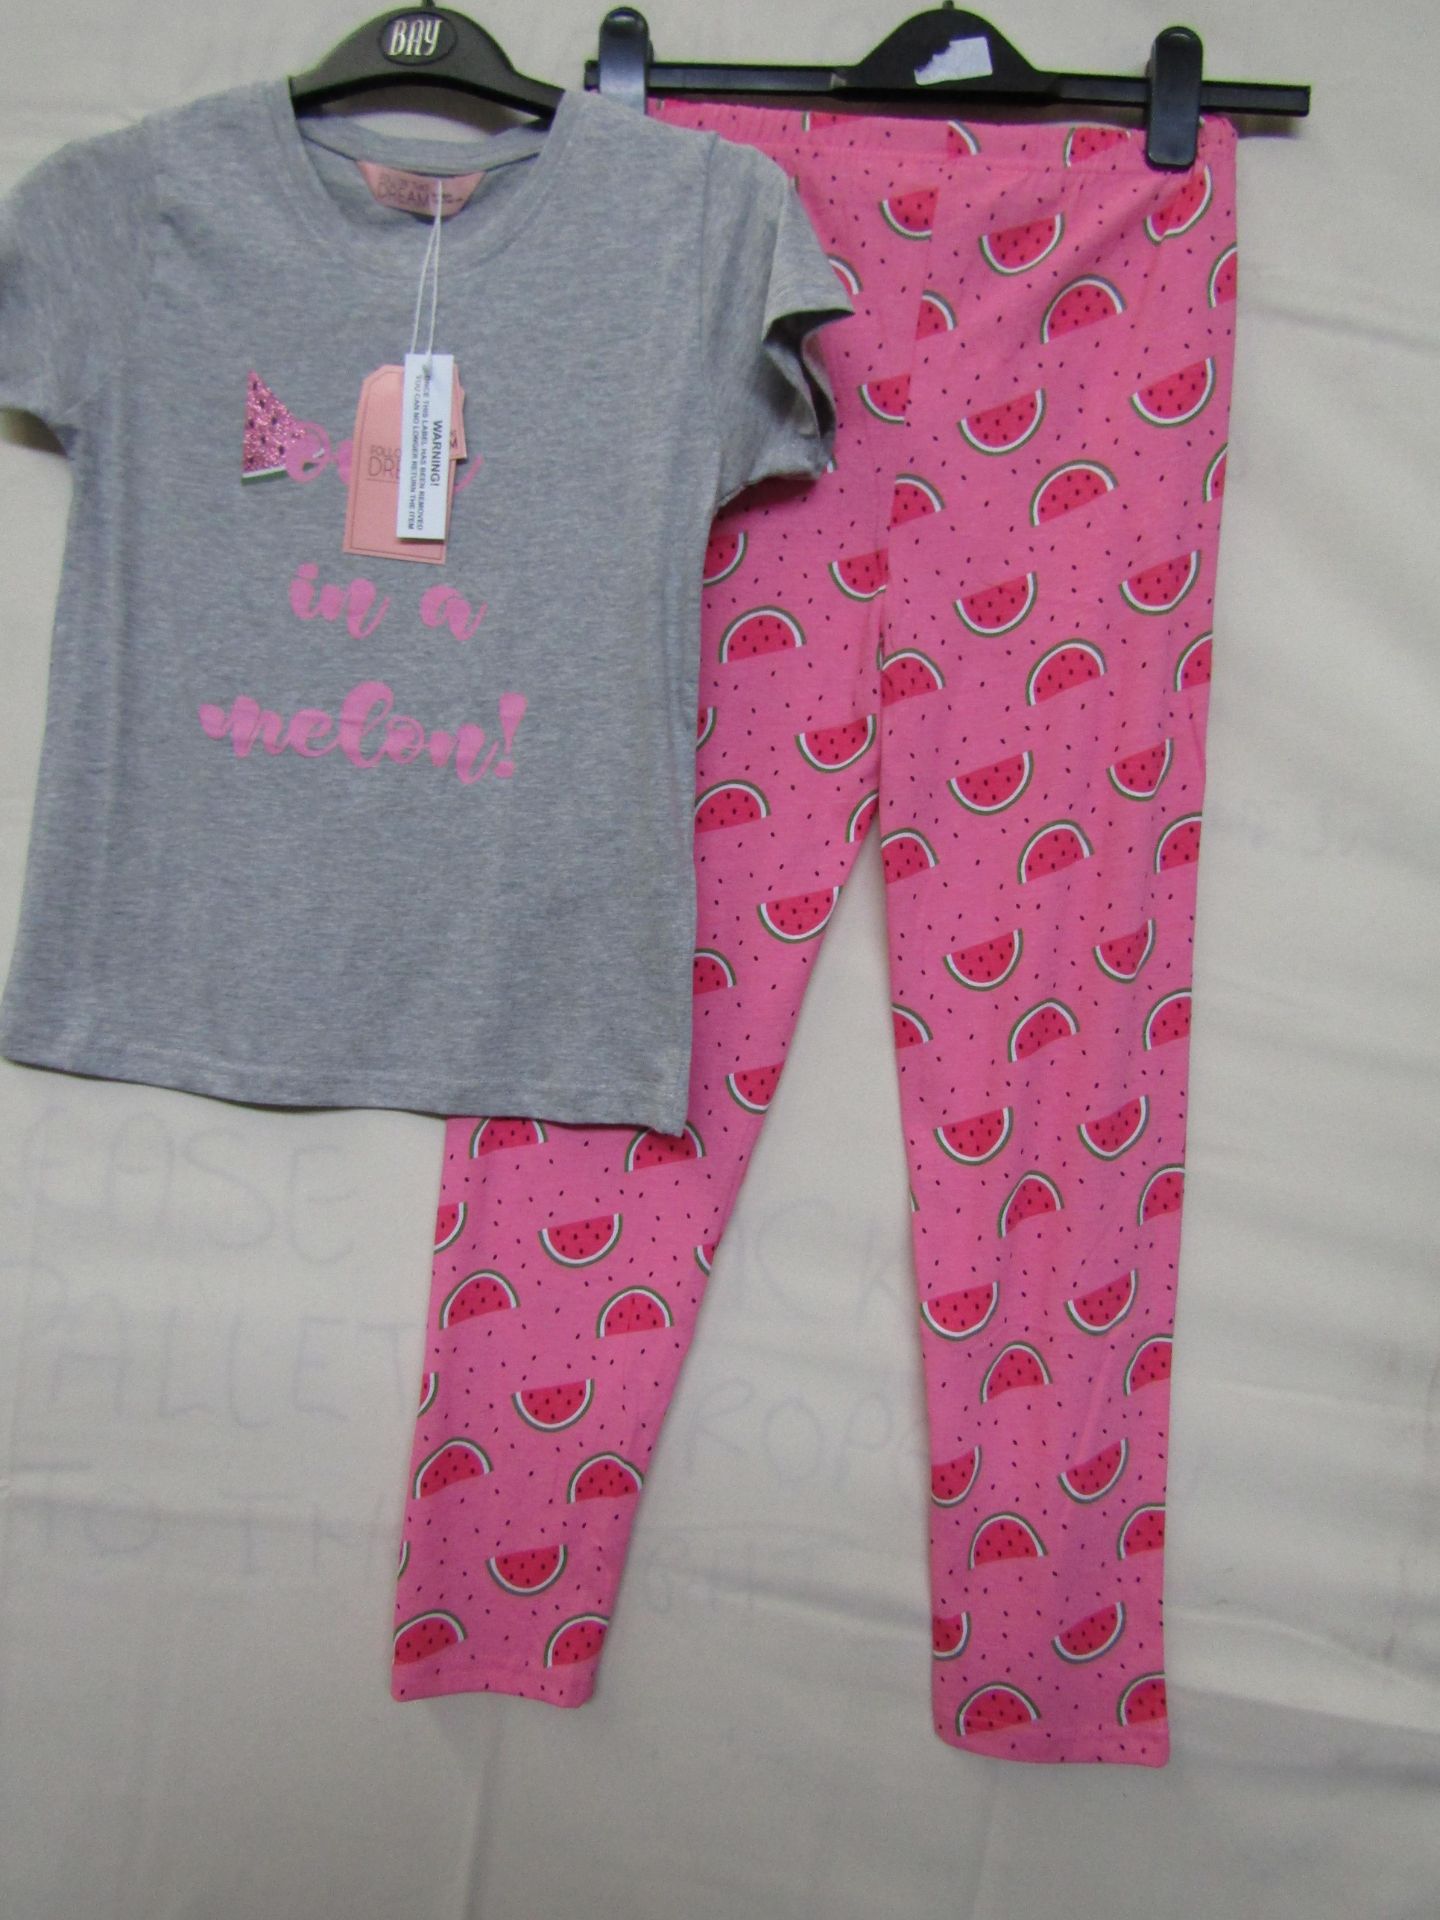 Follow That Dream Girls Jersey Fun Print Top & Leggings Pyjama Set Aged 7-8yrs New & Packaged